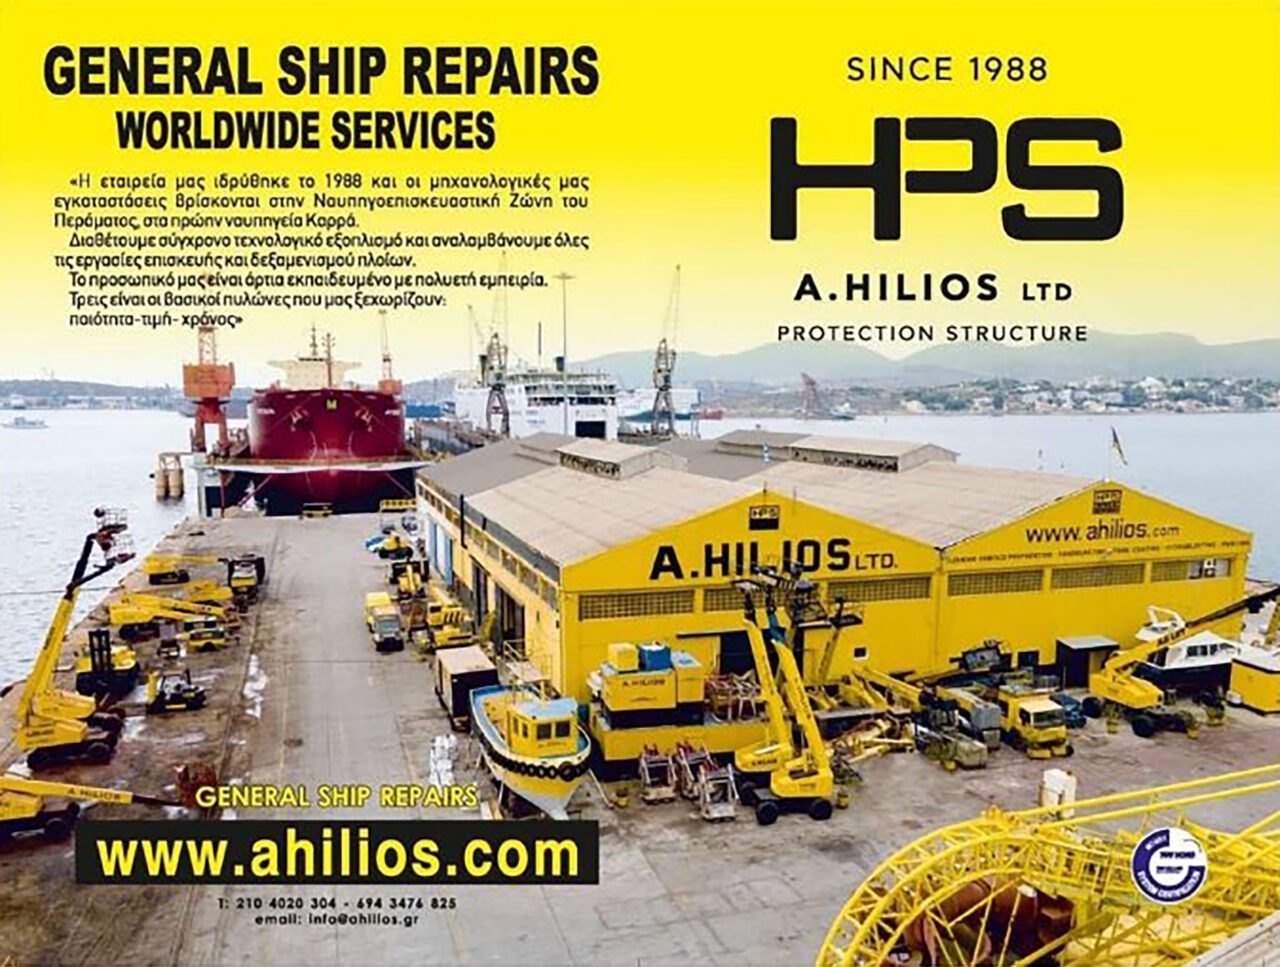 episkevi-plion-Hilios-episkeyes-plia-ploia-service-ship-repair-ship-boat-yacht-a.hilios-ydrovoli-karavion